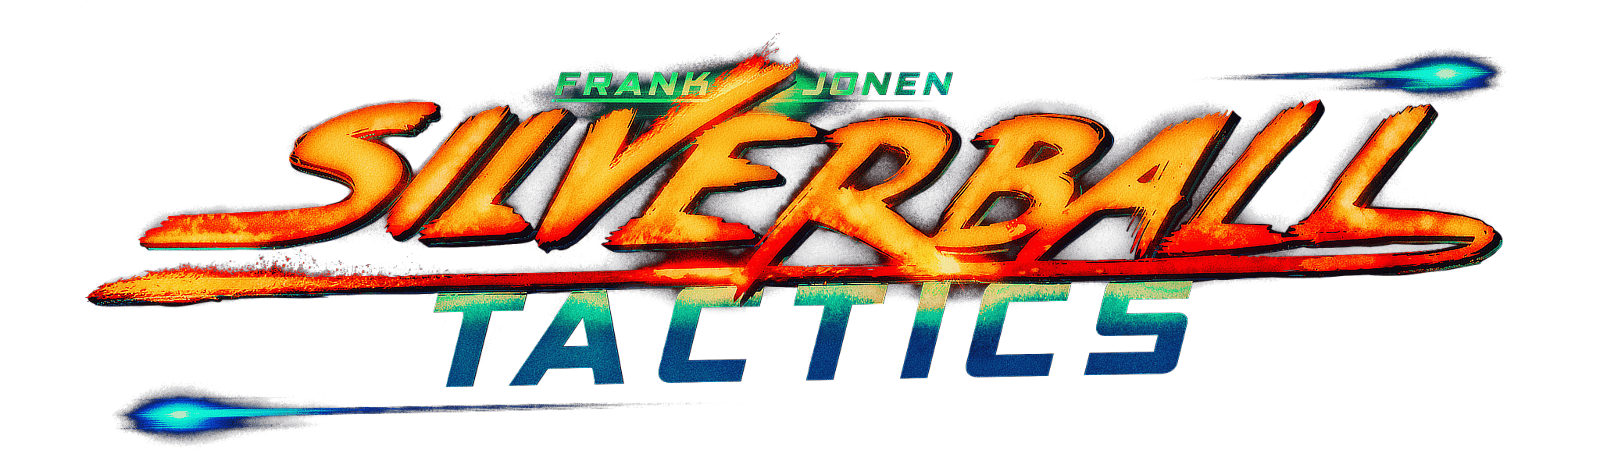 Silverball Tactics (Stylised Logo Artwork)